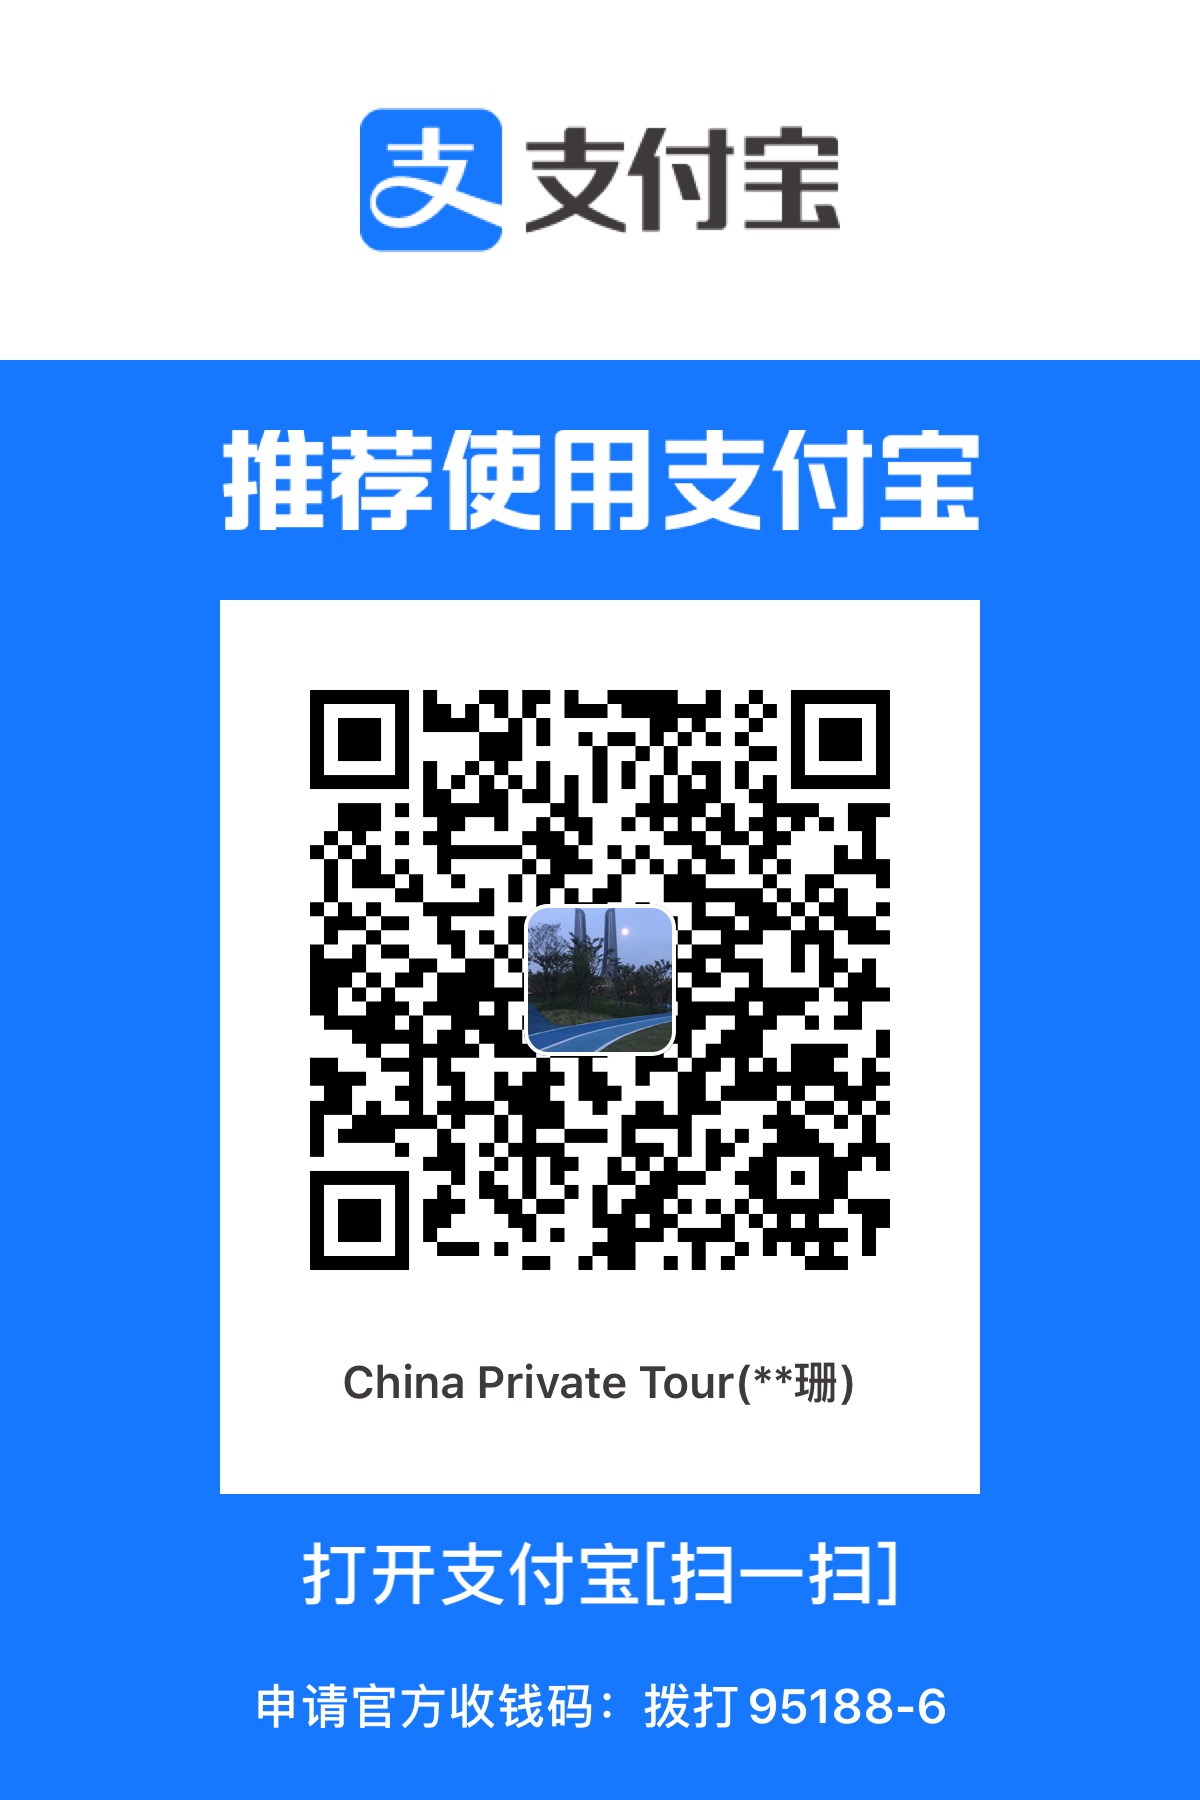 Alipay Payment QR Code.jpg